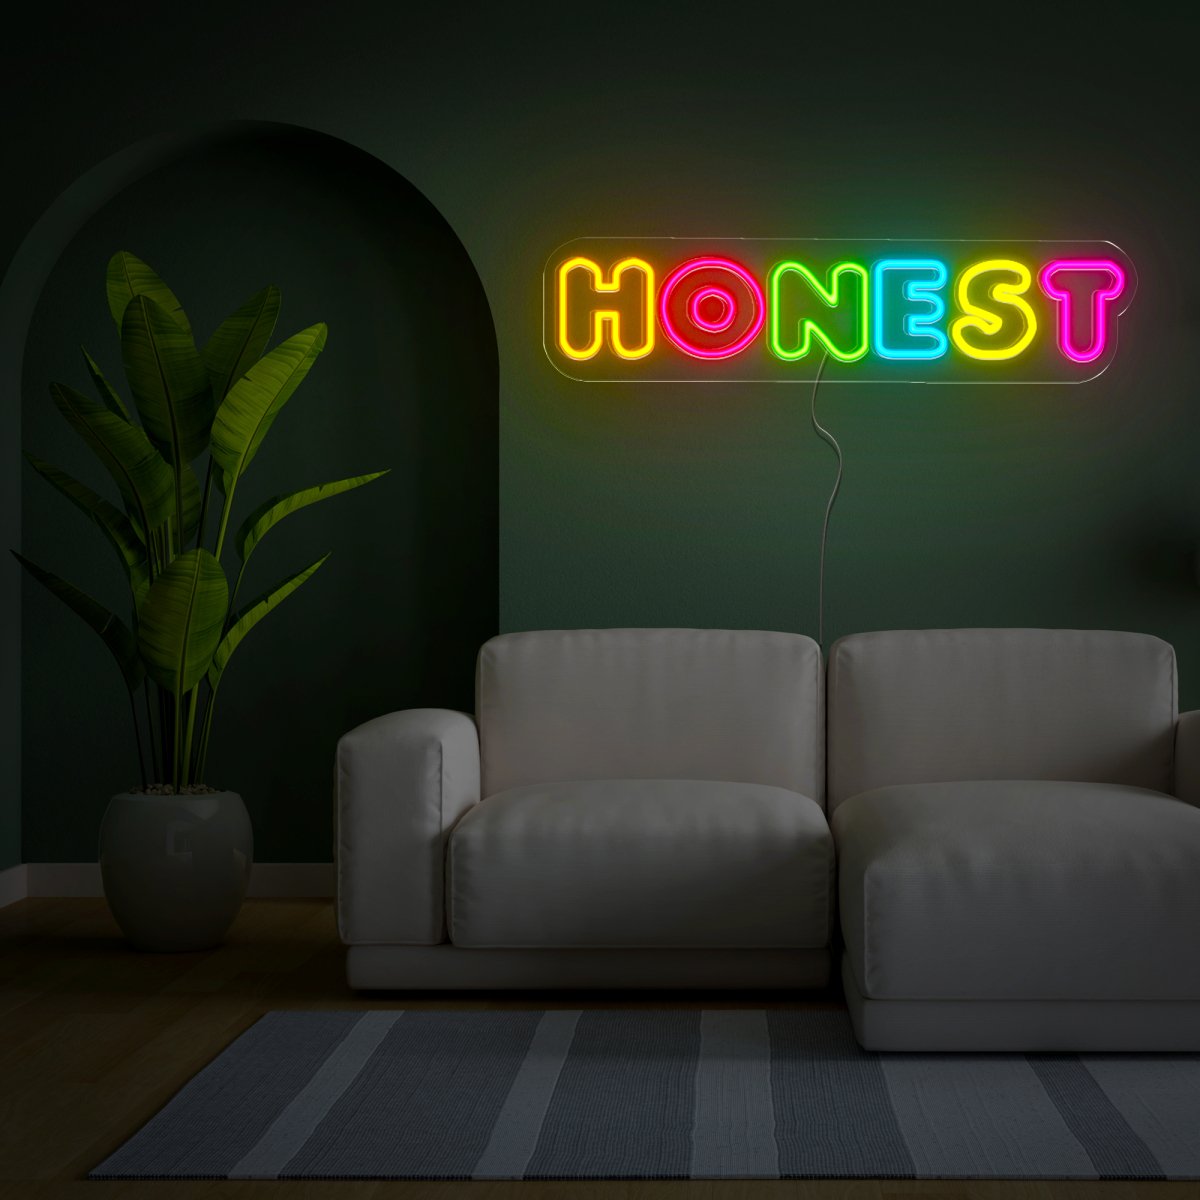 Honest Neon Sign - Reels Custom